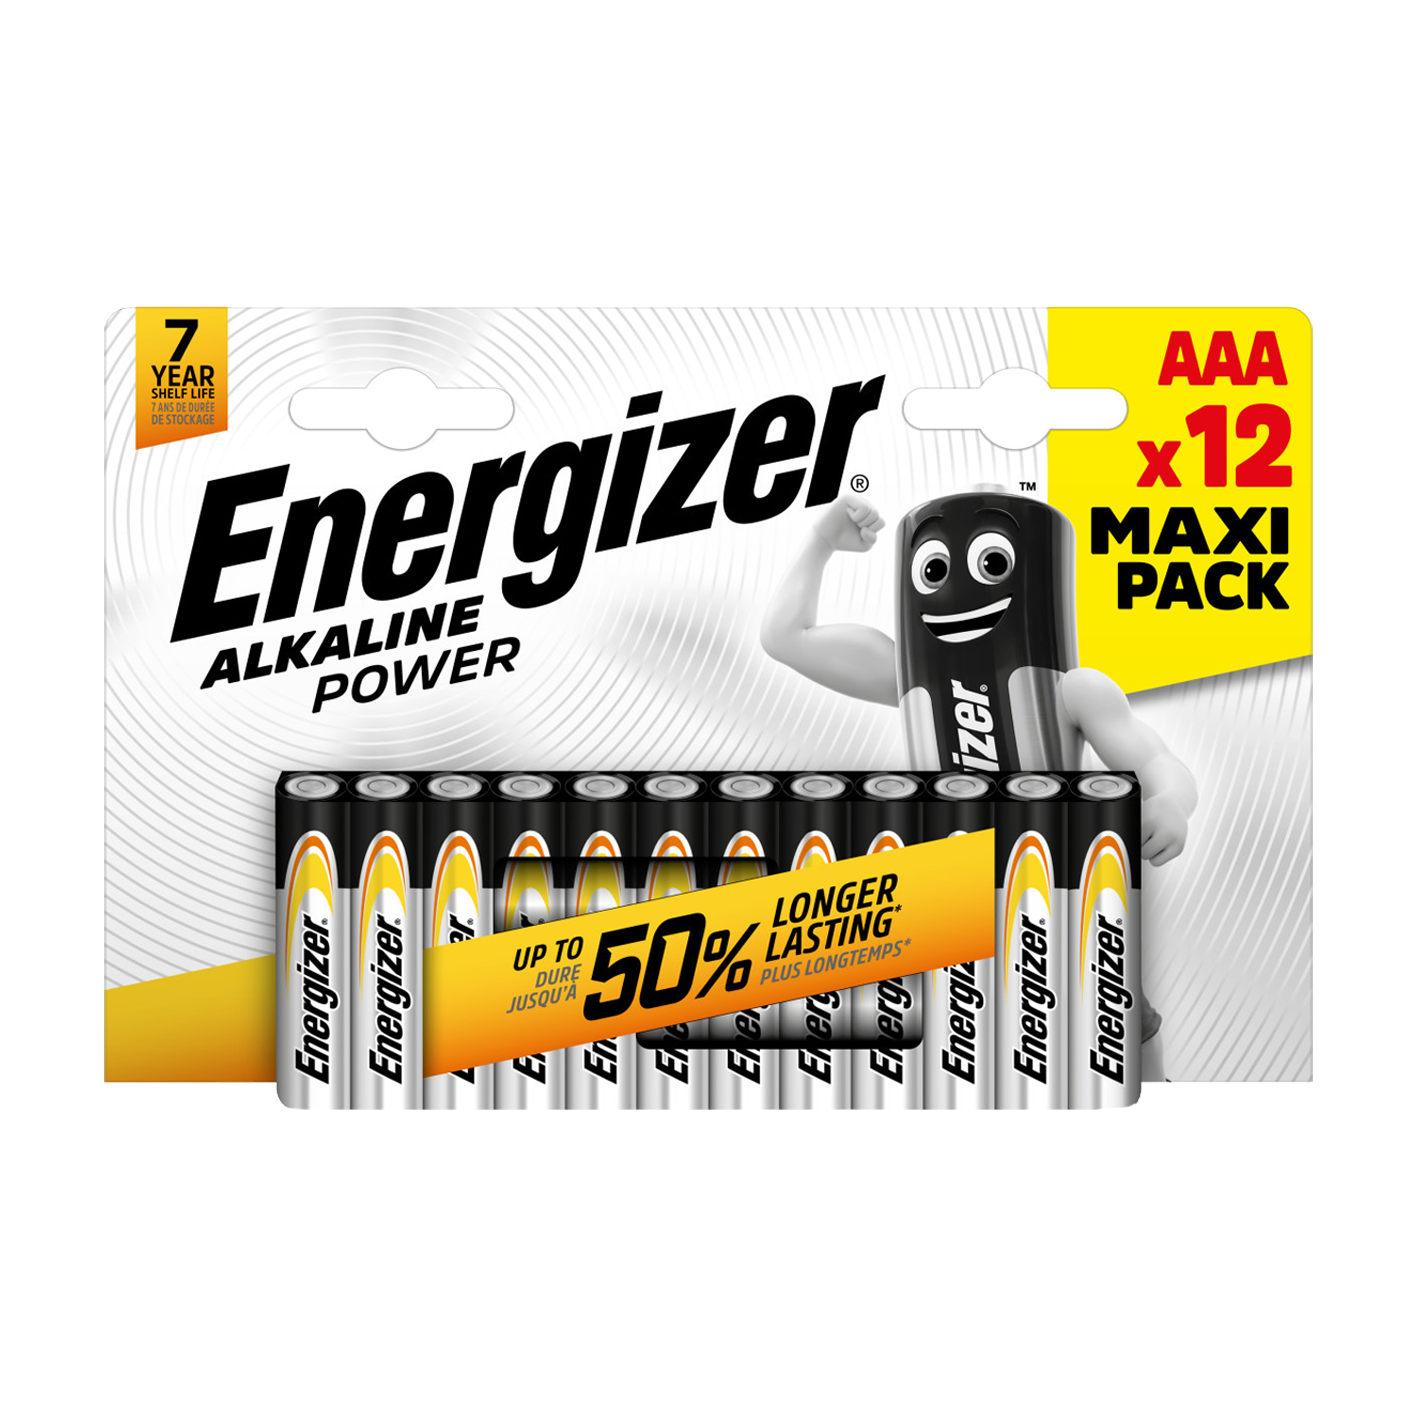 Energizer AAA Alkaline Power, Pack of 12